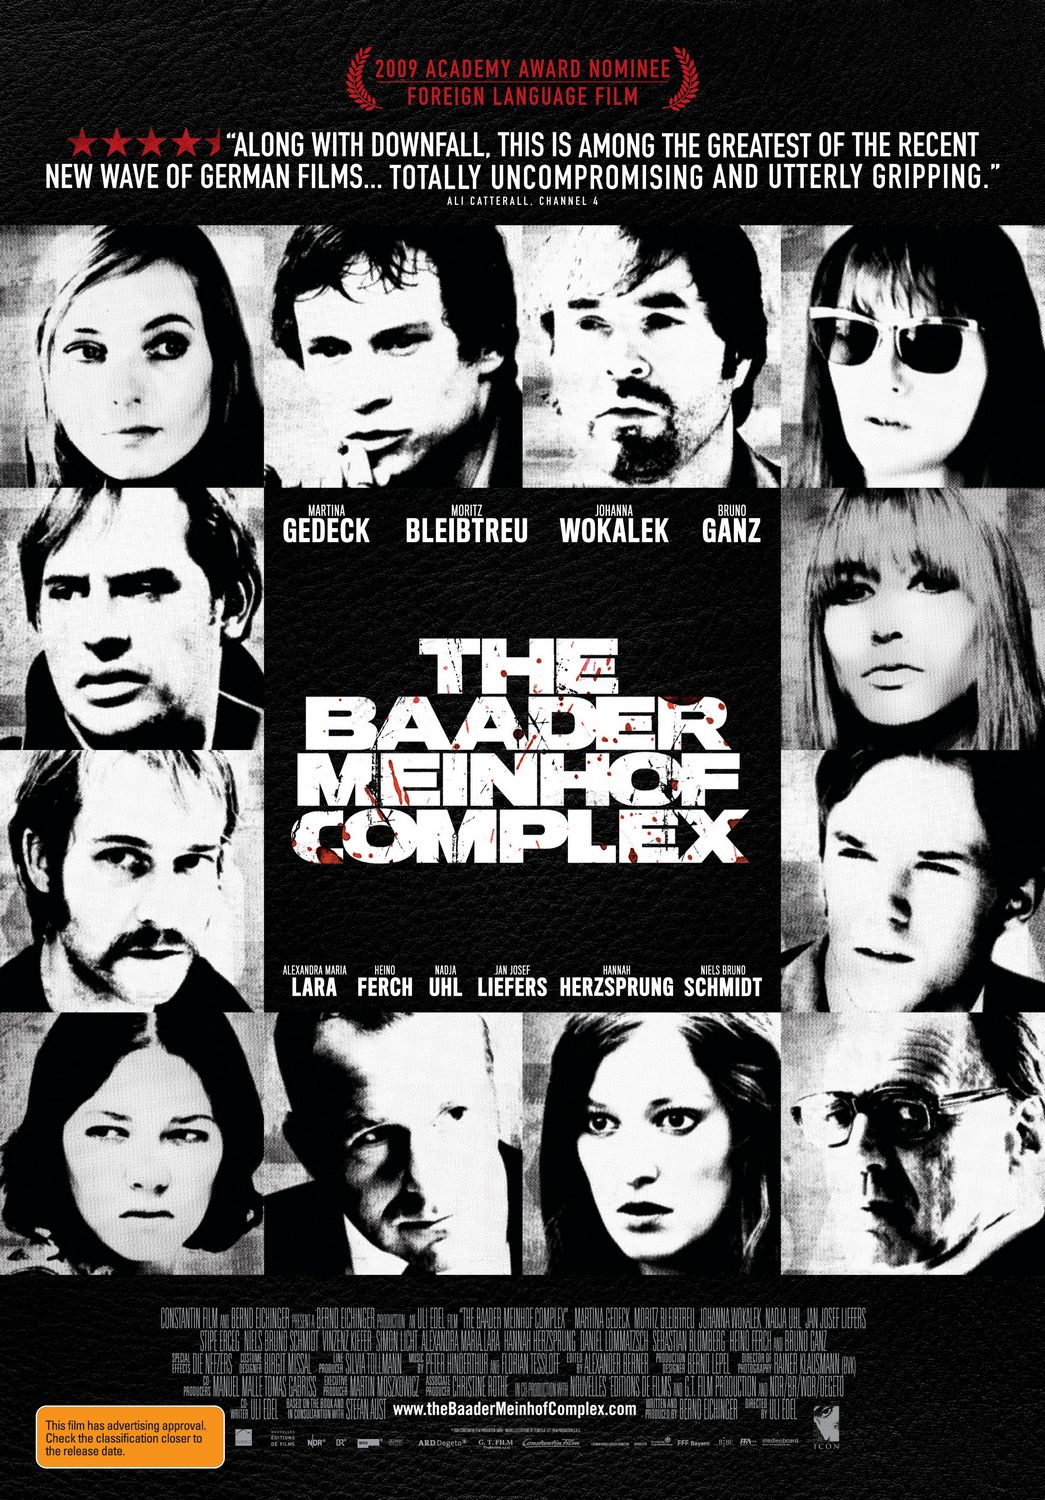 Extra Large Movie Poster Image for Baader Meinhof Komplex, Der (#5 of 6)